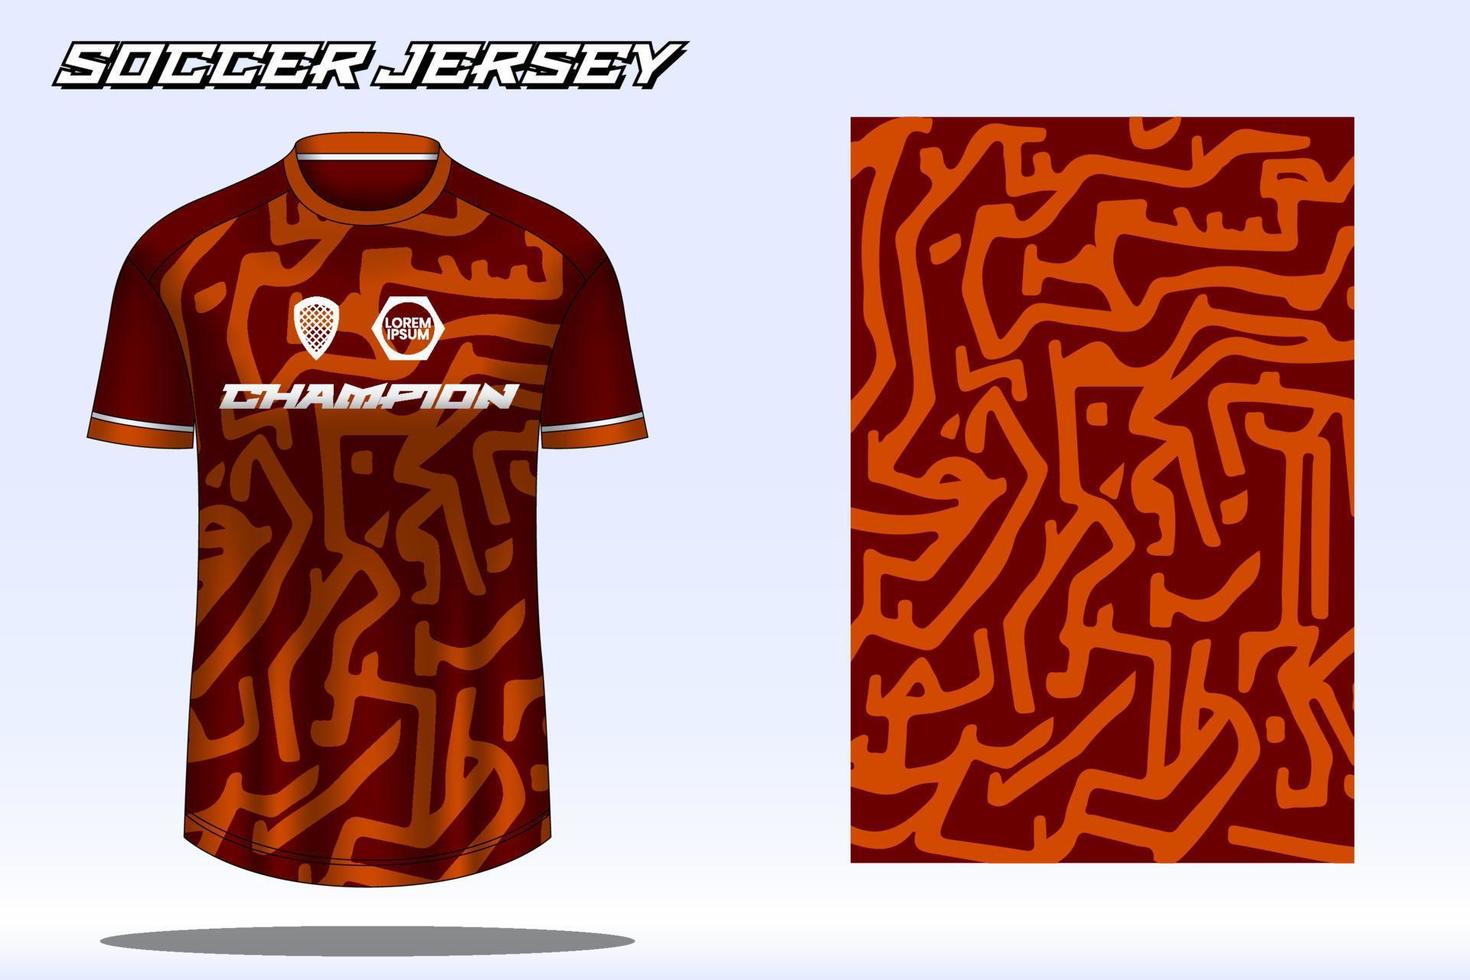 voetbal Jersey sport t-shirt ontwerp mockup voor Amerikaans voetbal club vector